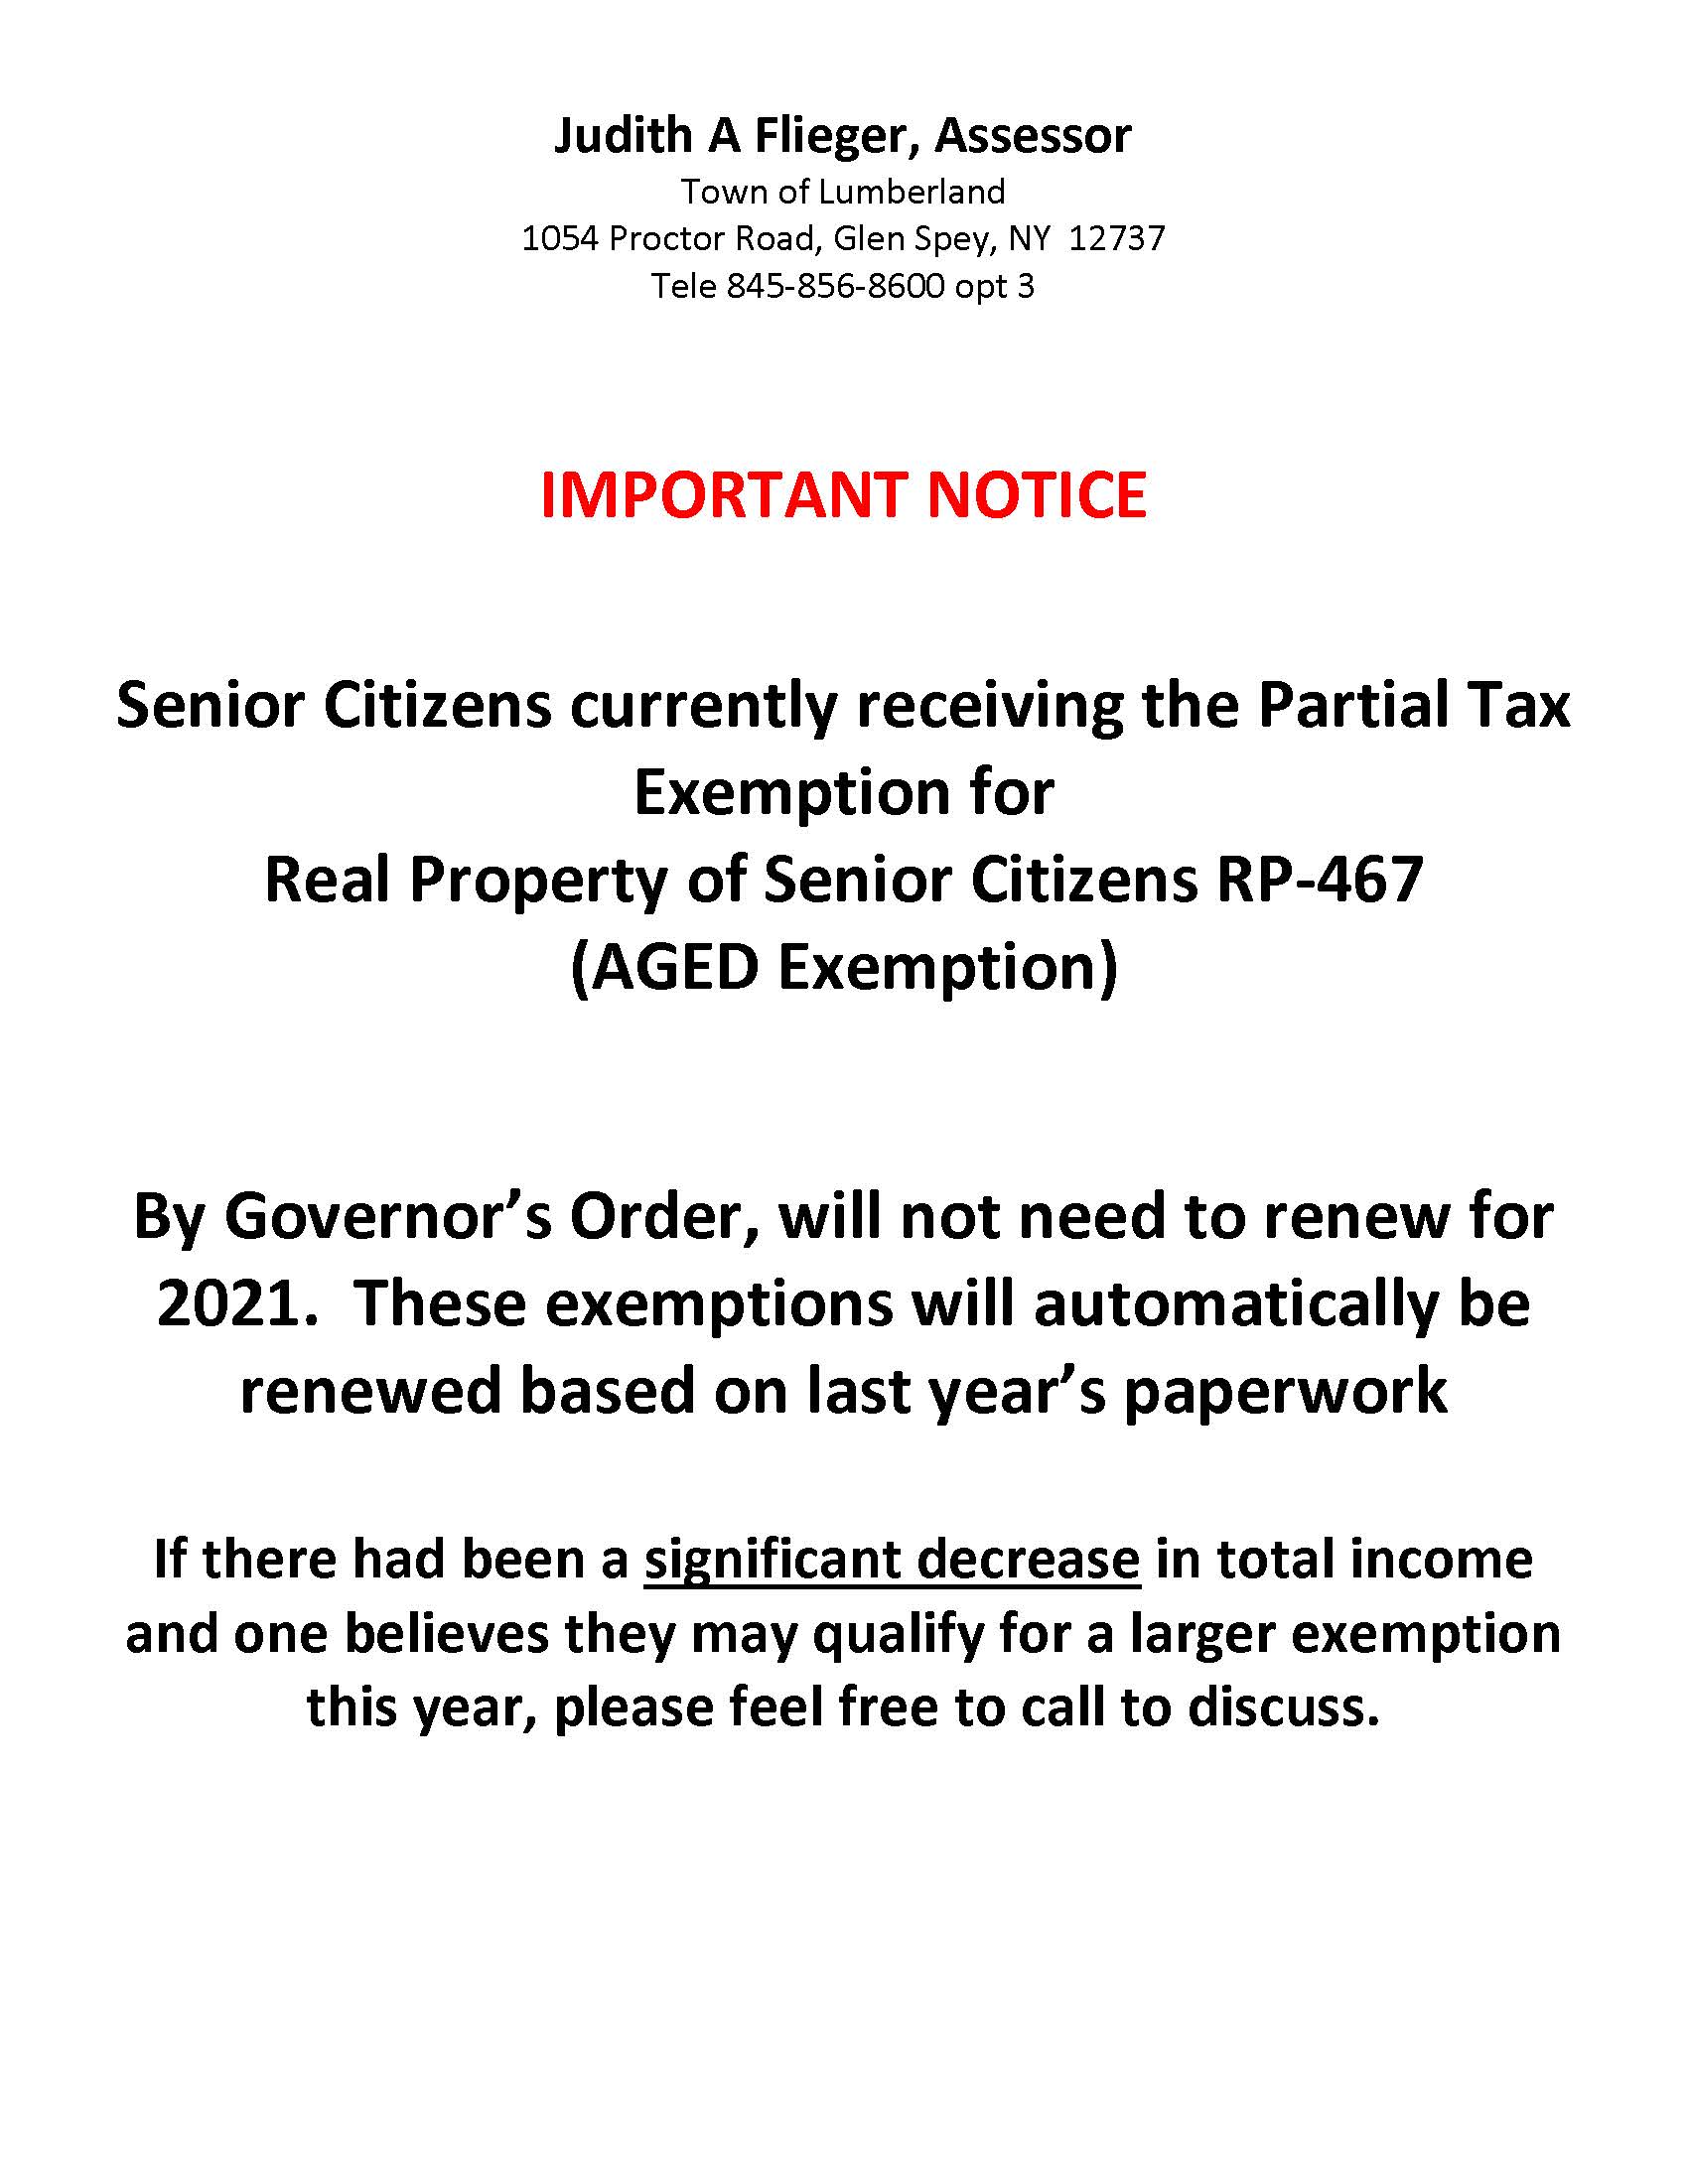 Governors Mandatory Senior Citizen Exemption Renewal